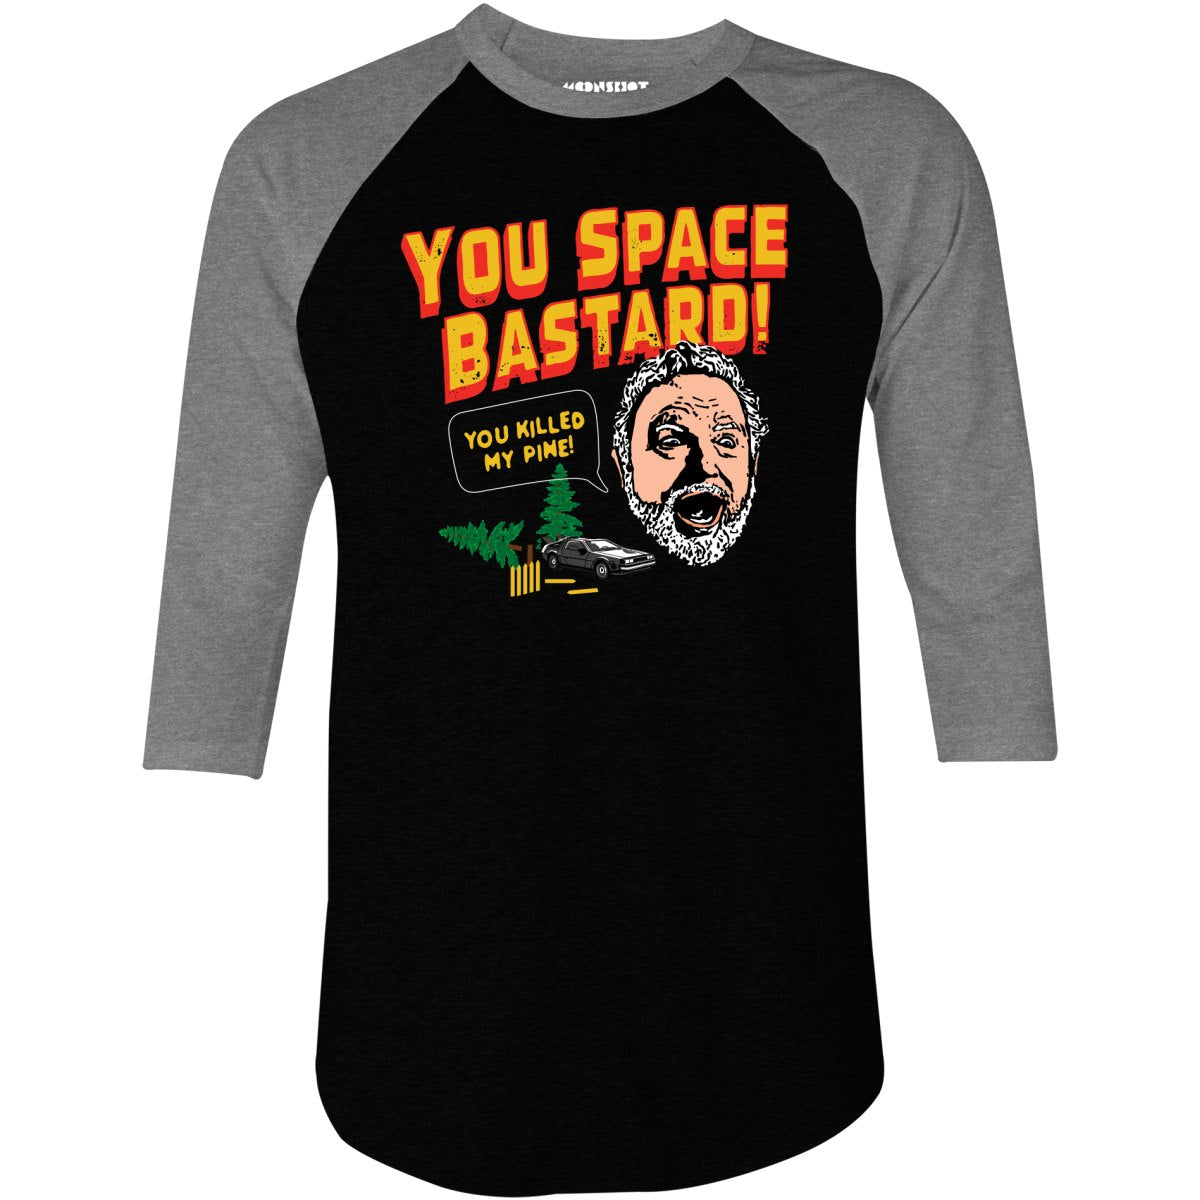 You Space Bastard! You Killed My Pine! - 3/4 Sleeve Raglan T-Shirt